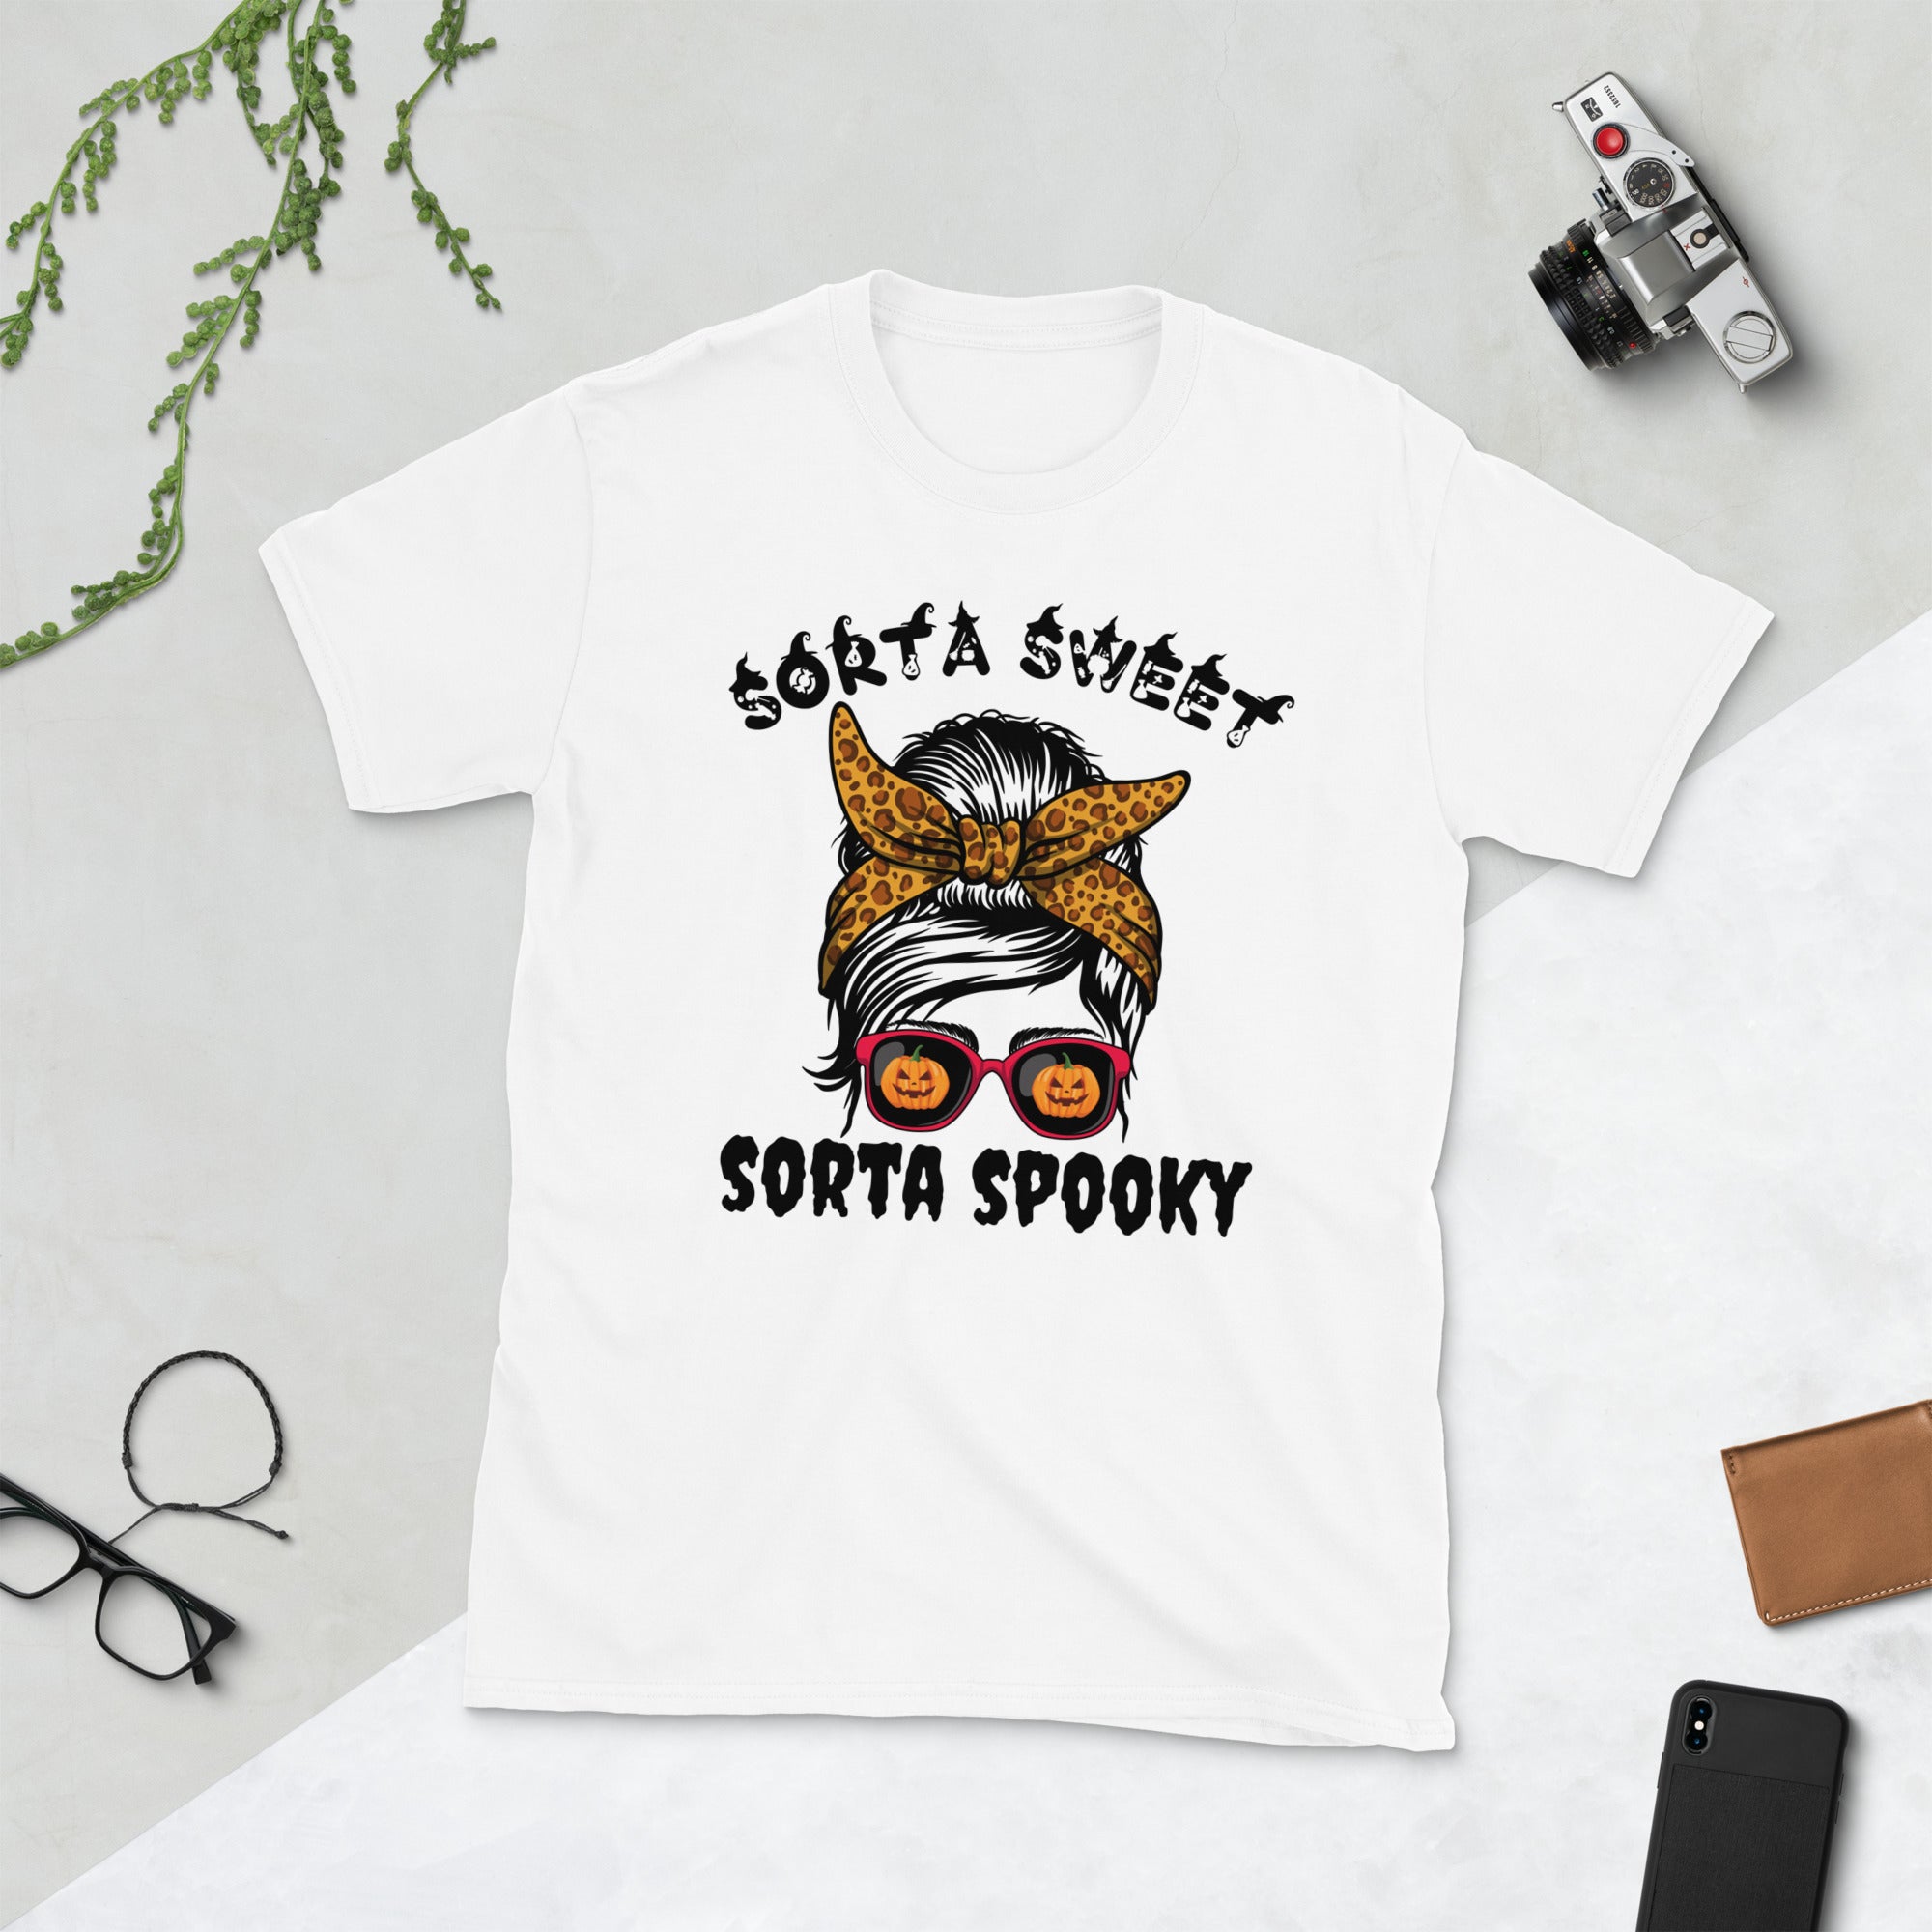 Sorta Sweet Sorta Spooky, Messy Bun Halloween Costume Shirt, Pumpkin Shirt, Spooky Season Shirt, Funny Halloween Gifts, Leopard Print Tee